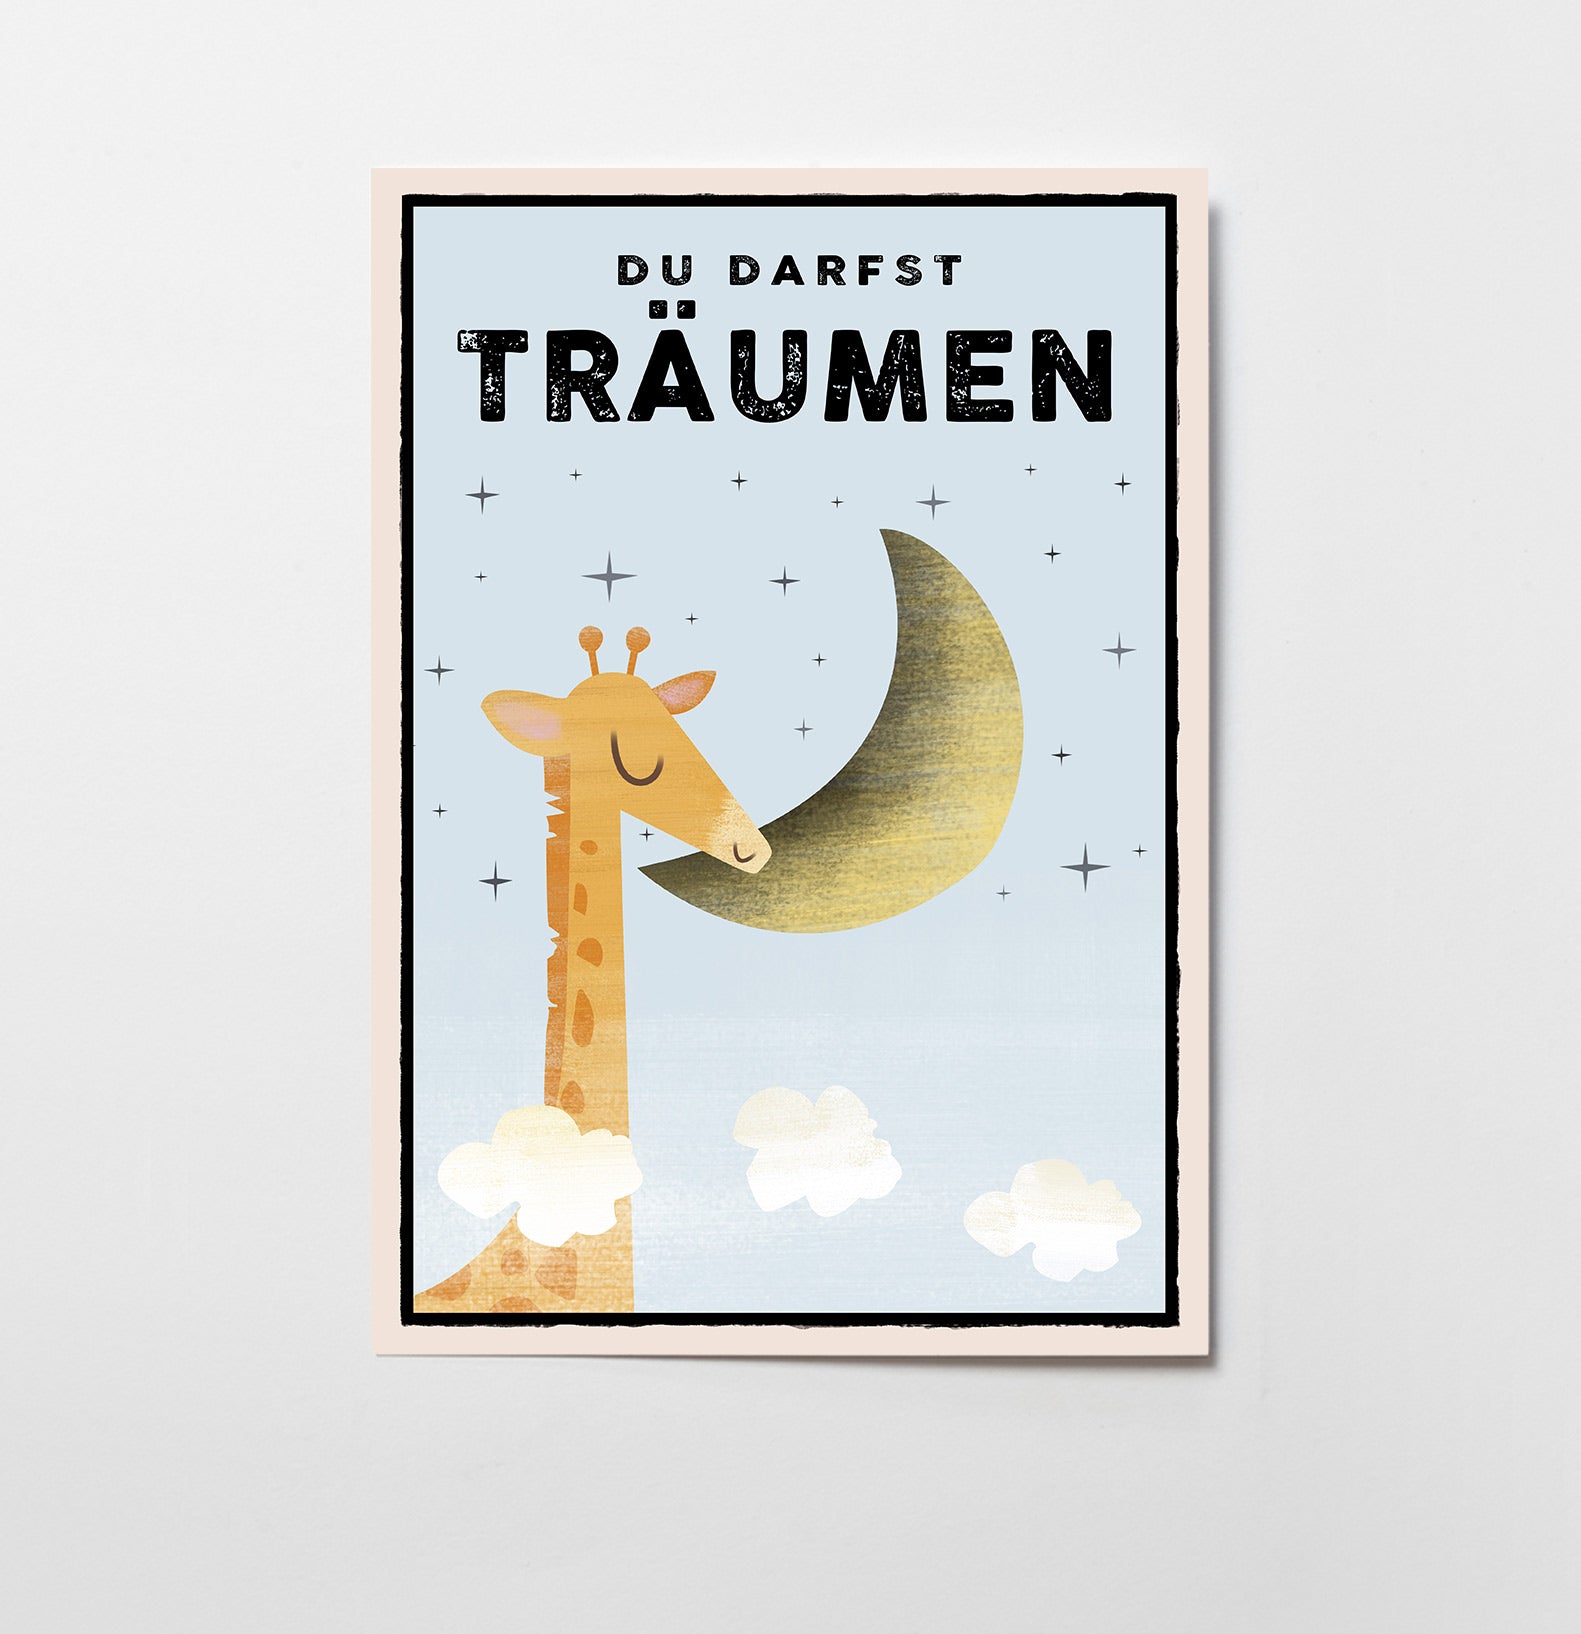 TRÄUMEN – Poster Kindermut - darfst Du